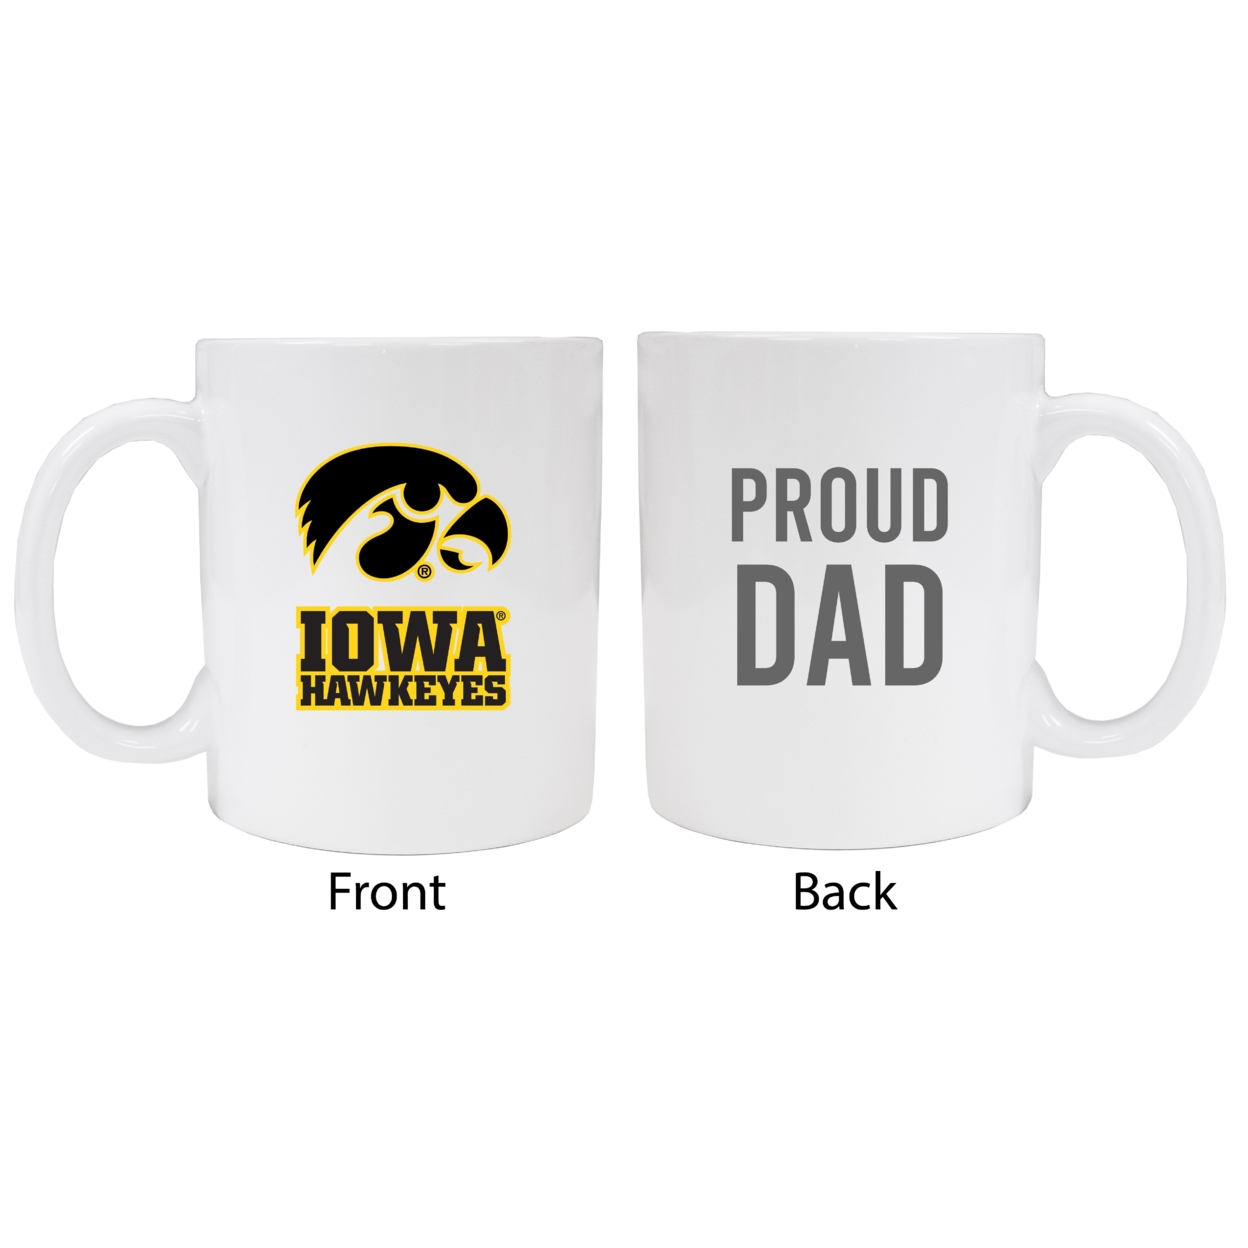 Iowa Hawkeyes Proud Dad Ceramic Coffee Mug - White (2 Pack)